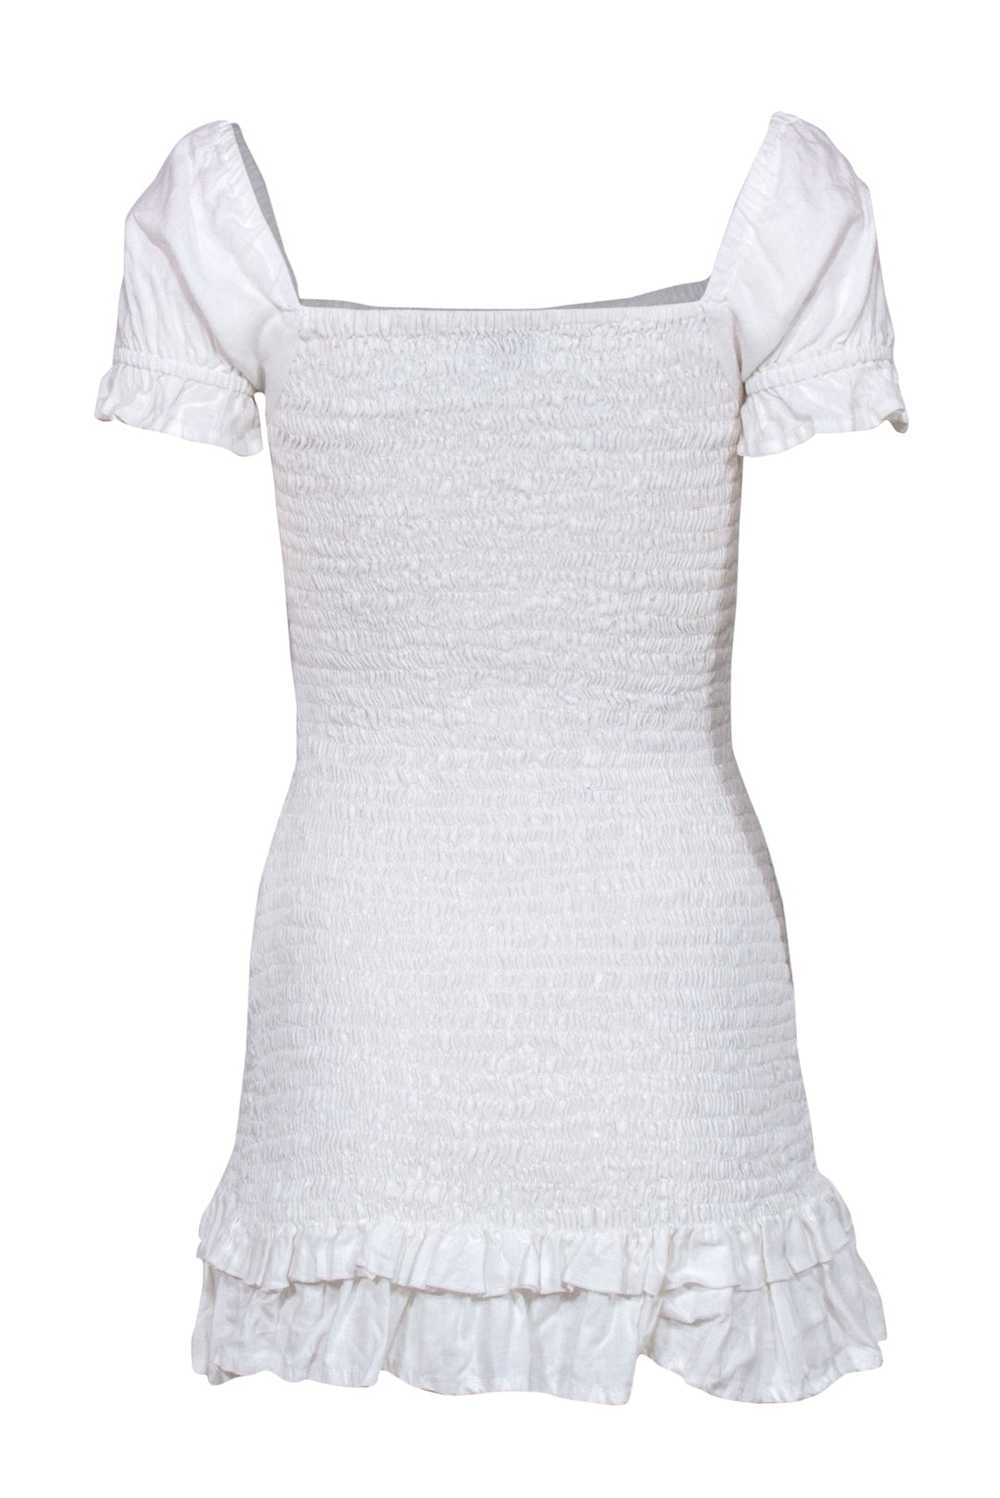 Faithfull the Brand - White Smocked Mini Dress Sz… - image 3